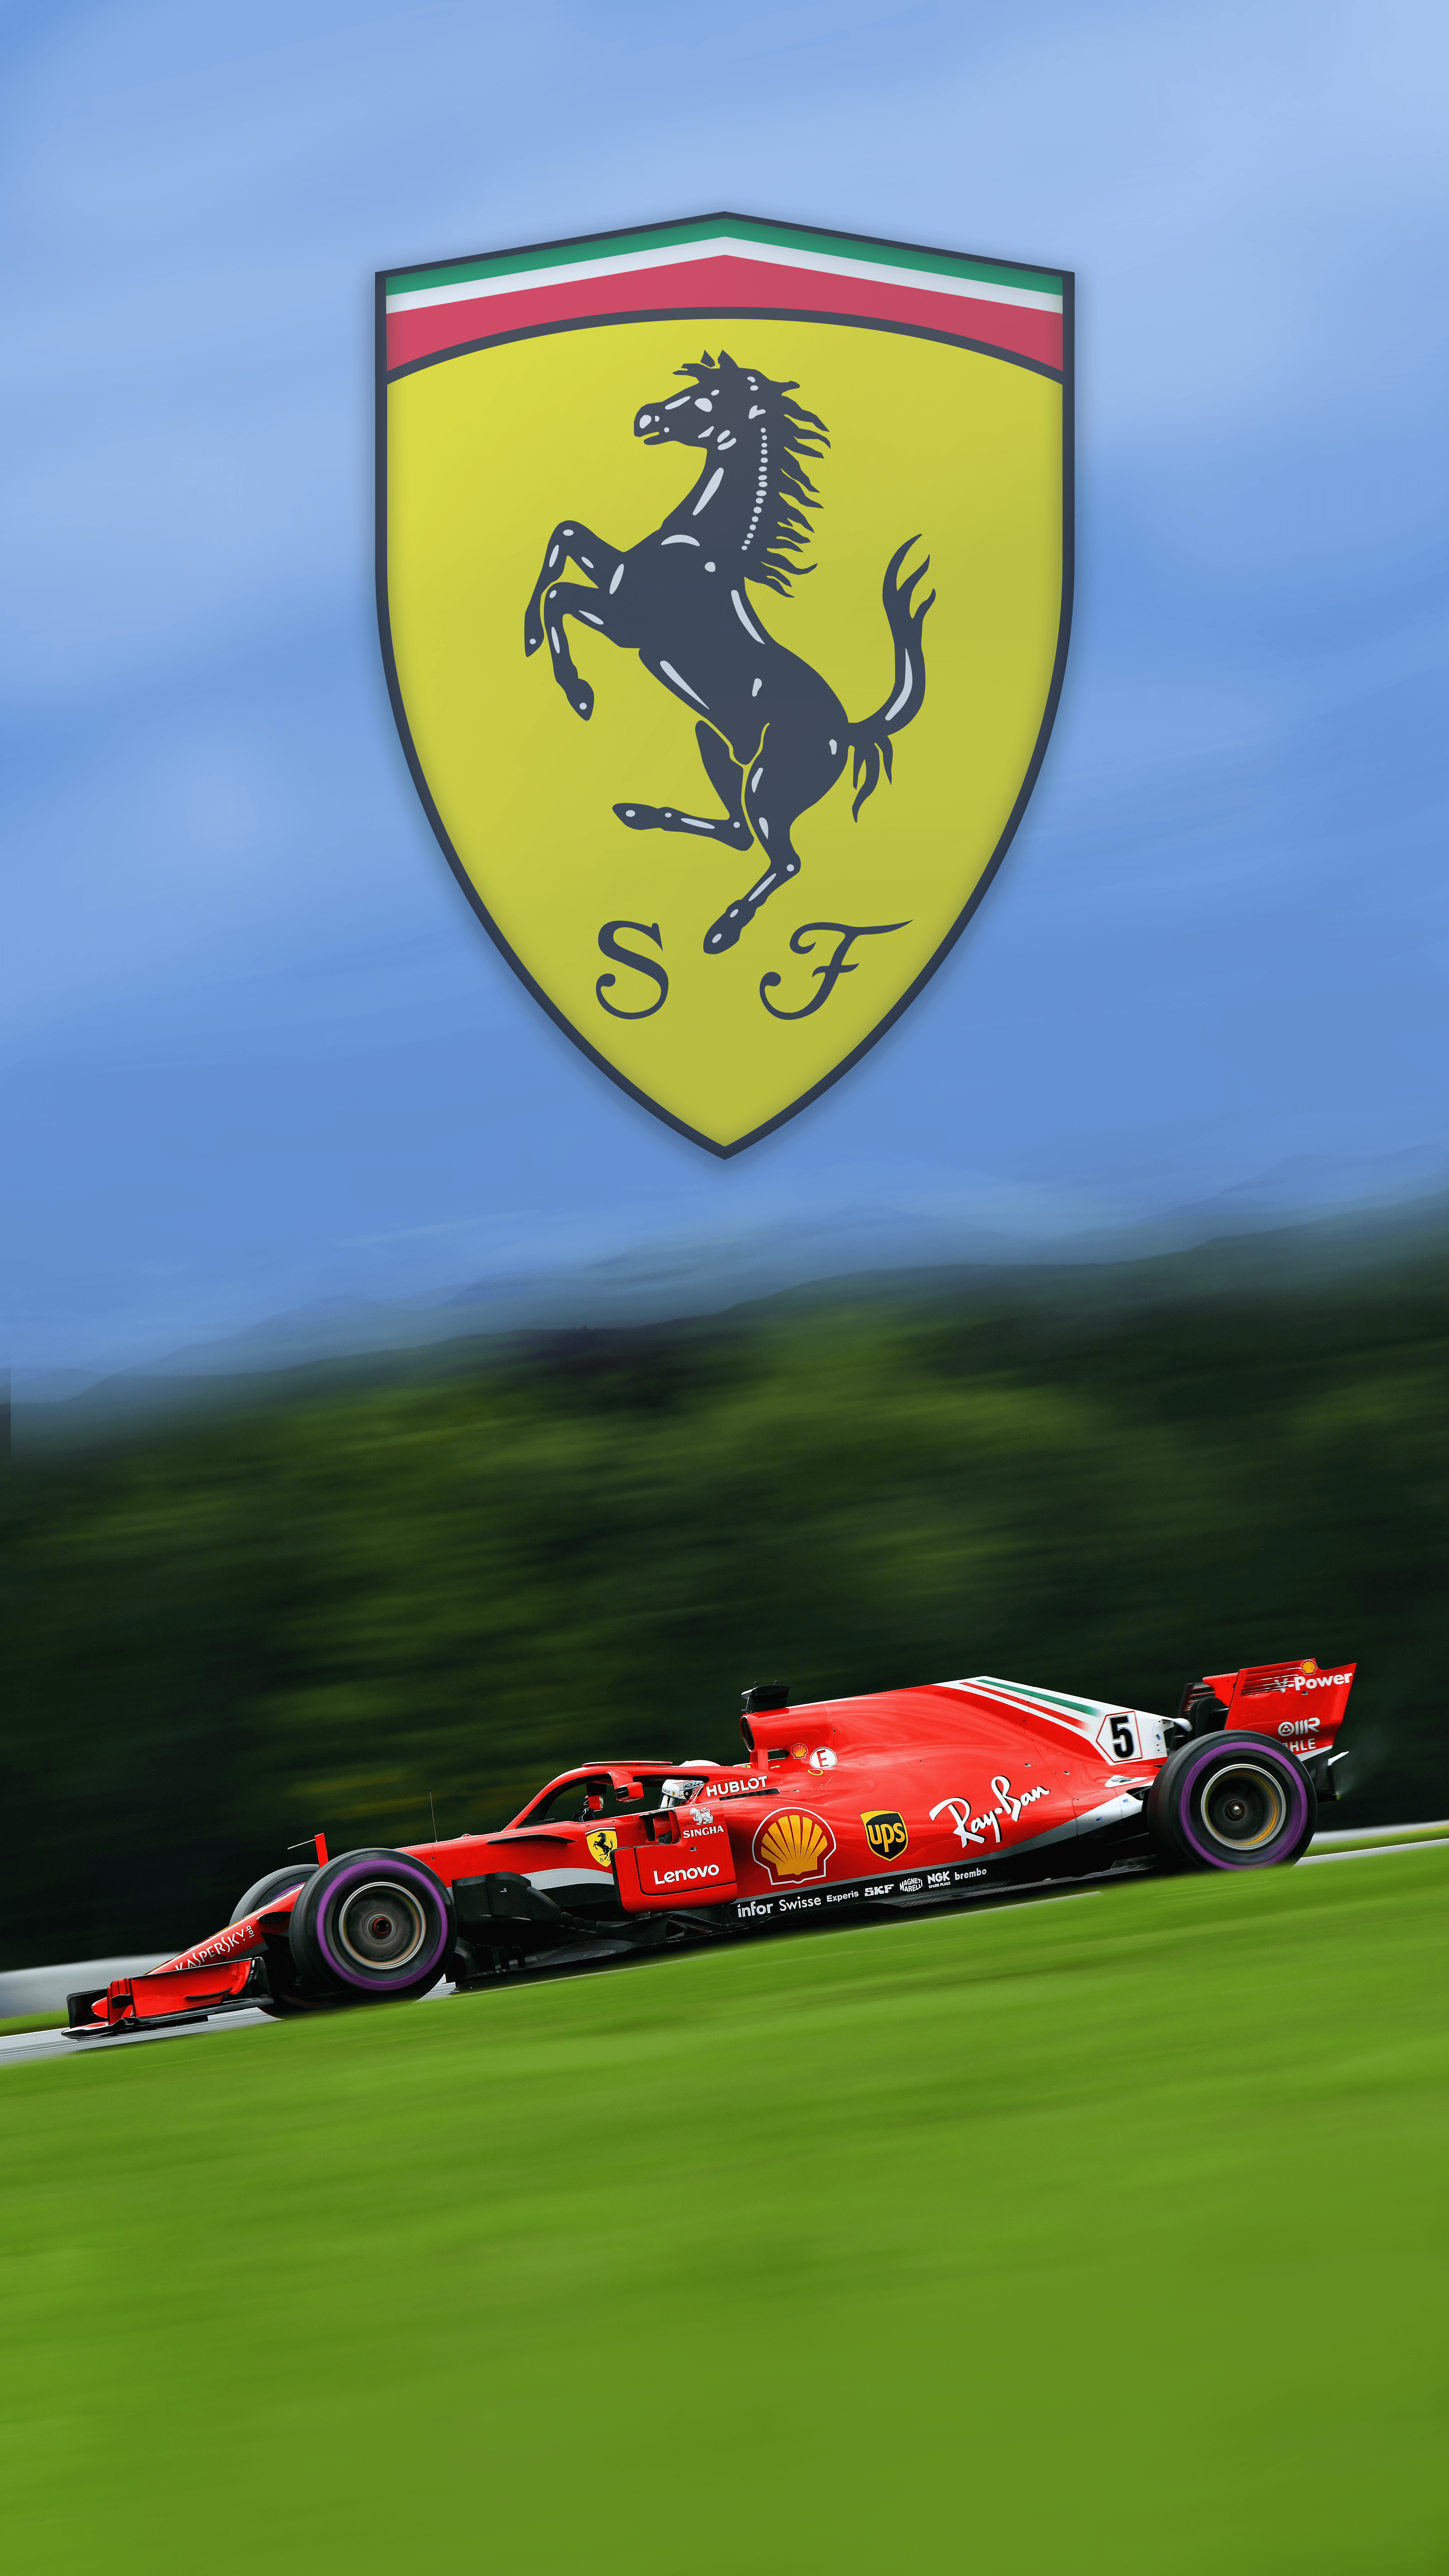 Scuderia Ferrari Vettel [mobile wallpaper]